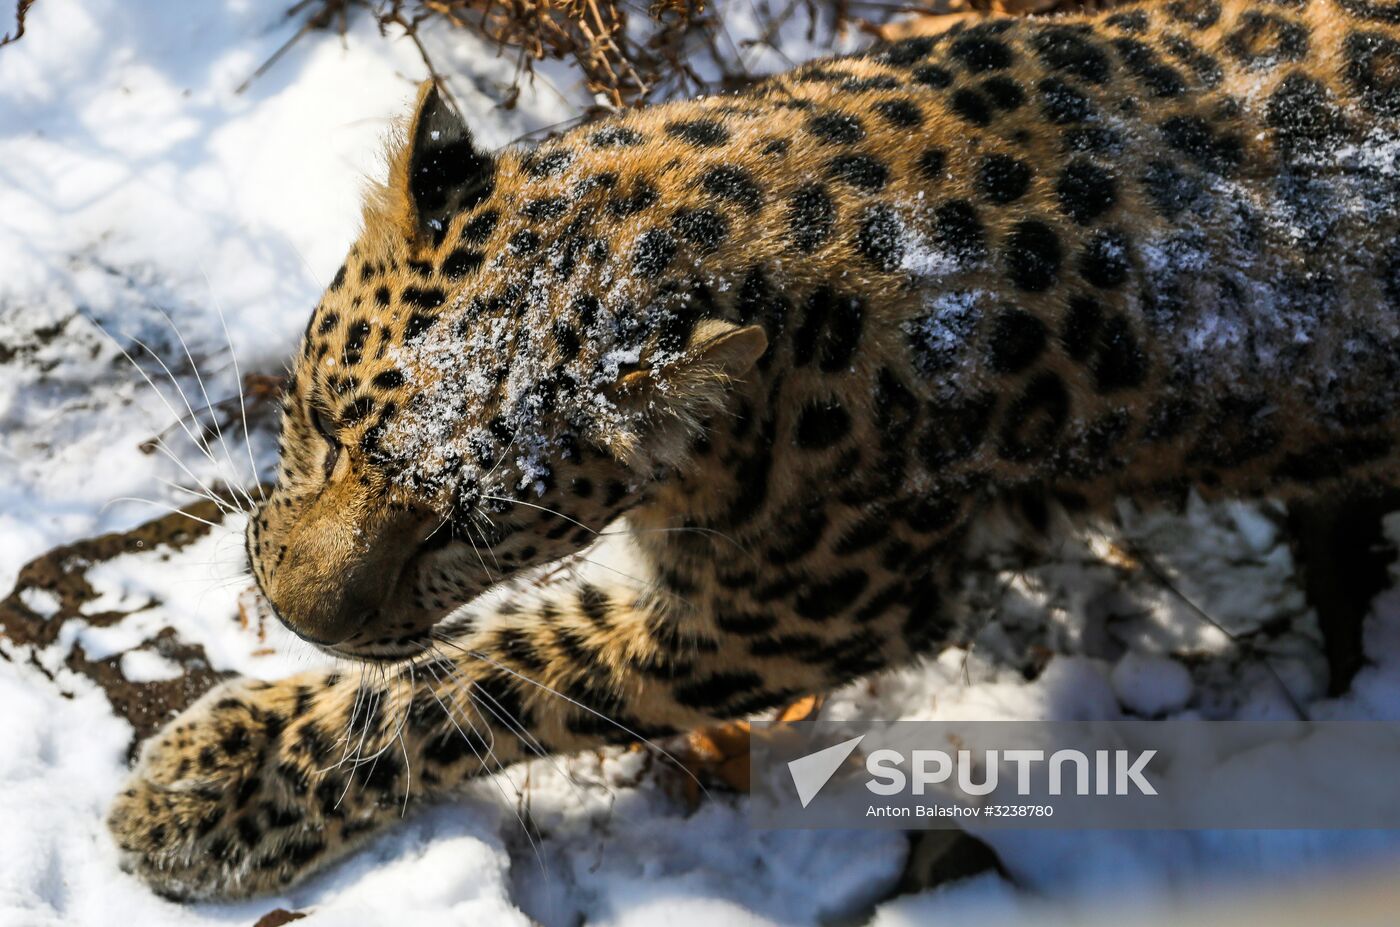 Far Eastern female leopard Rona at Primorye safari park